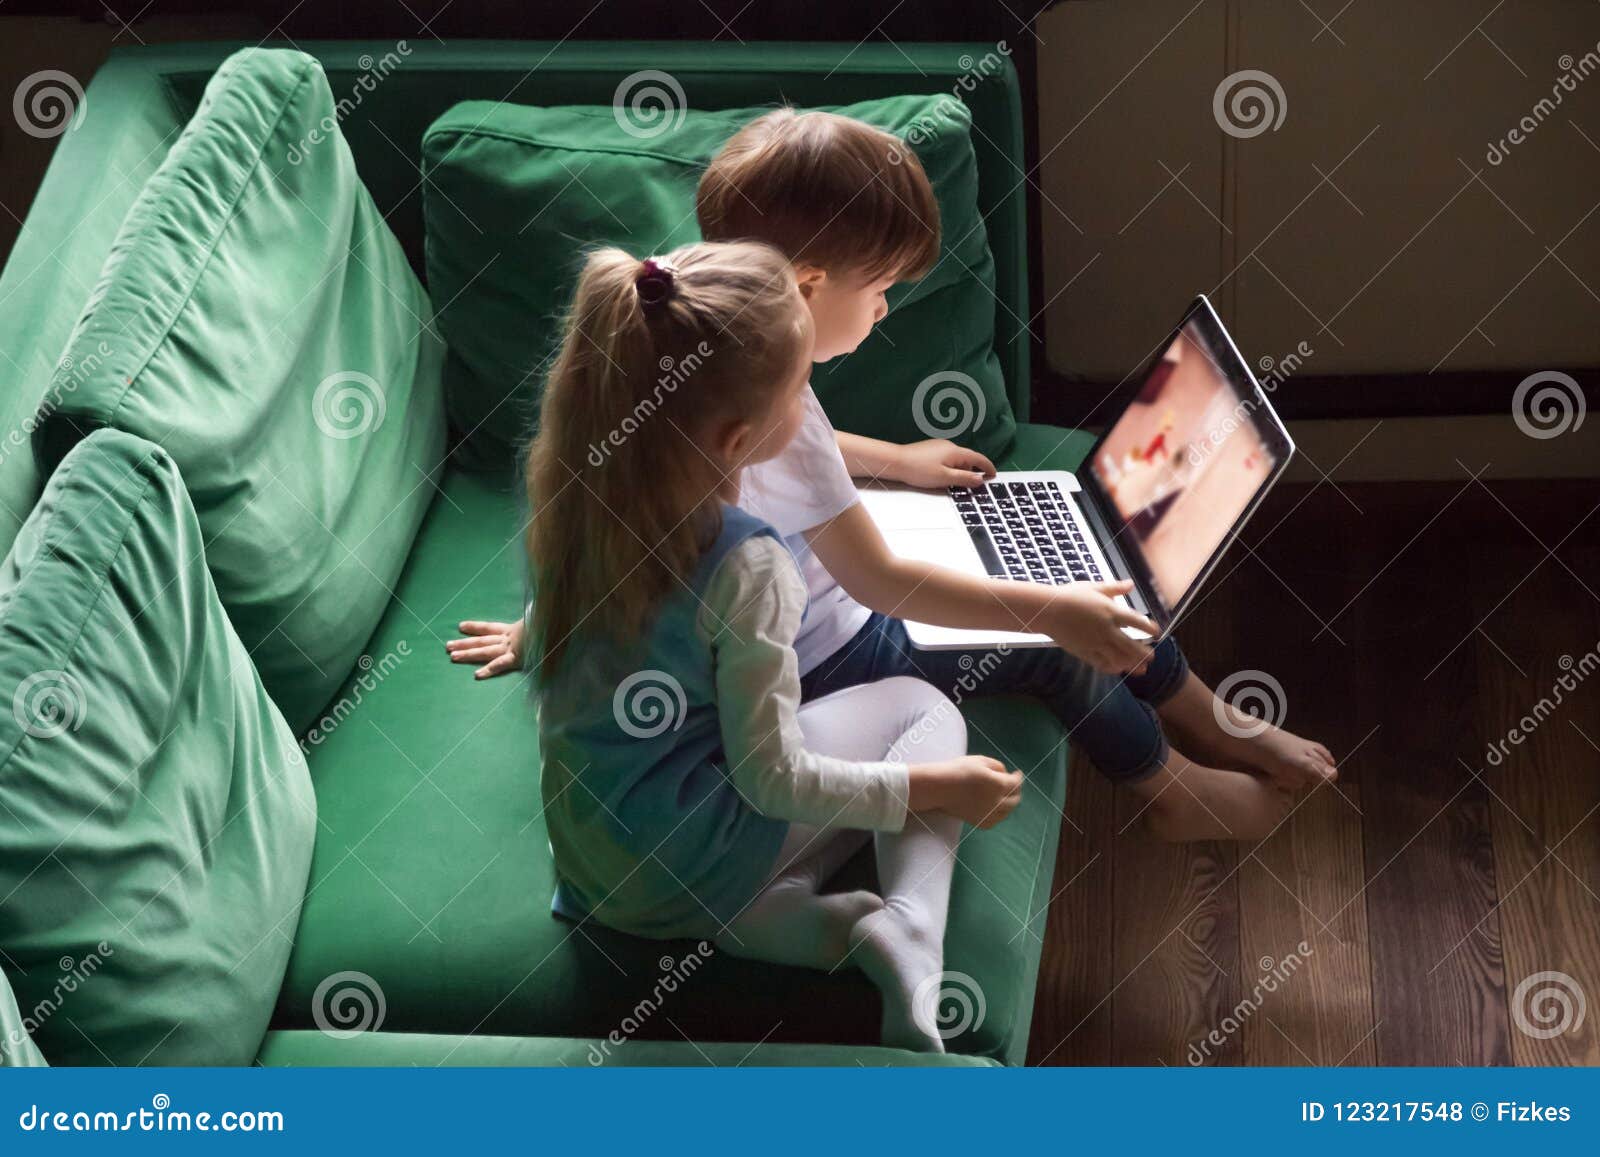 siblings boy and girl watching kid cartoons using laptop togethe